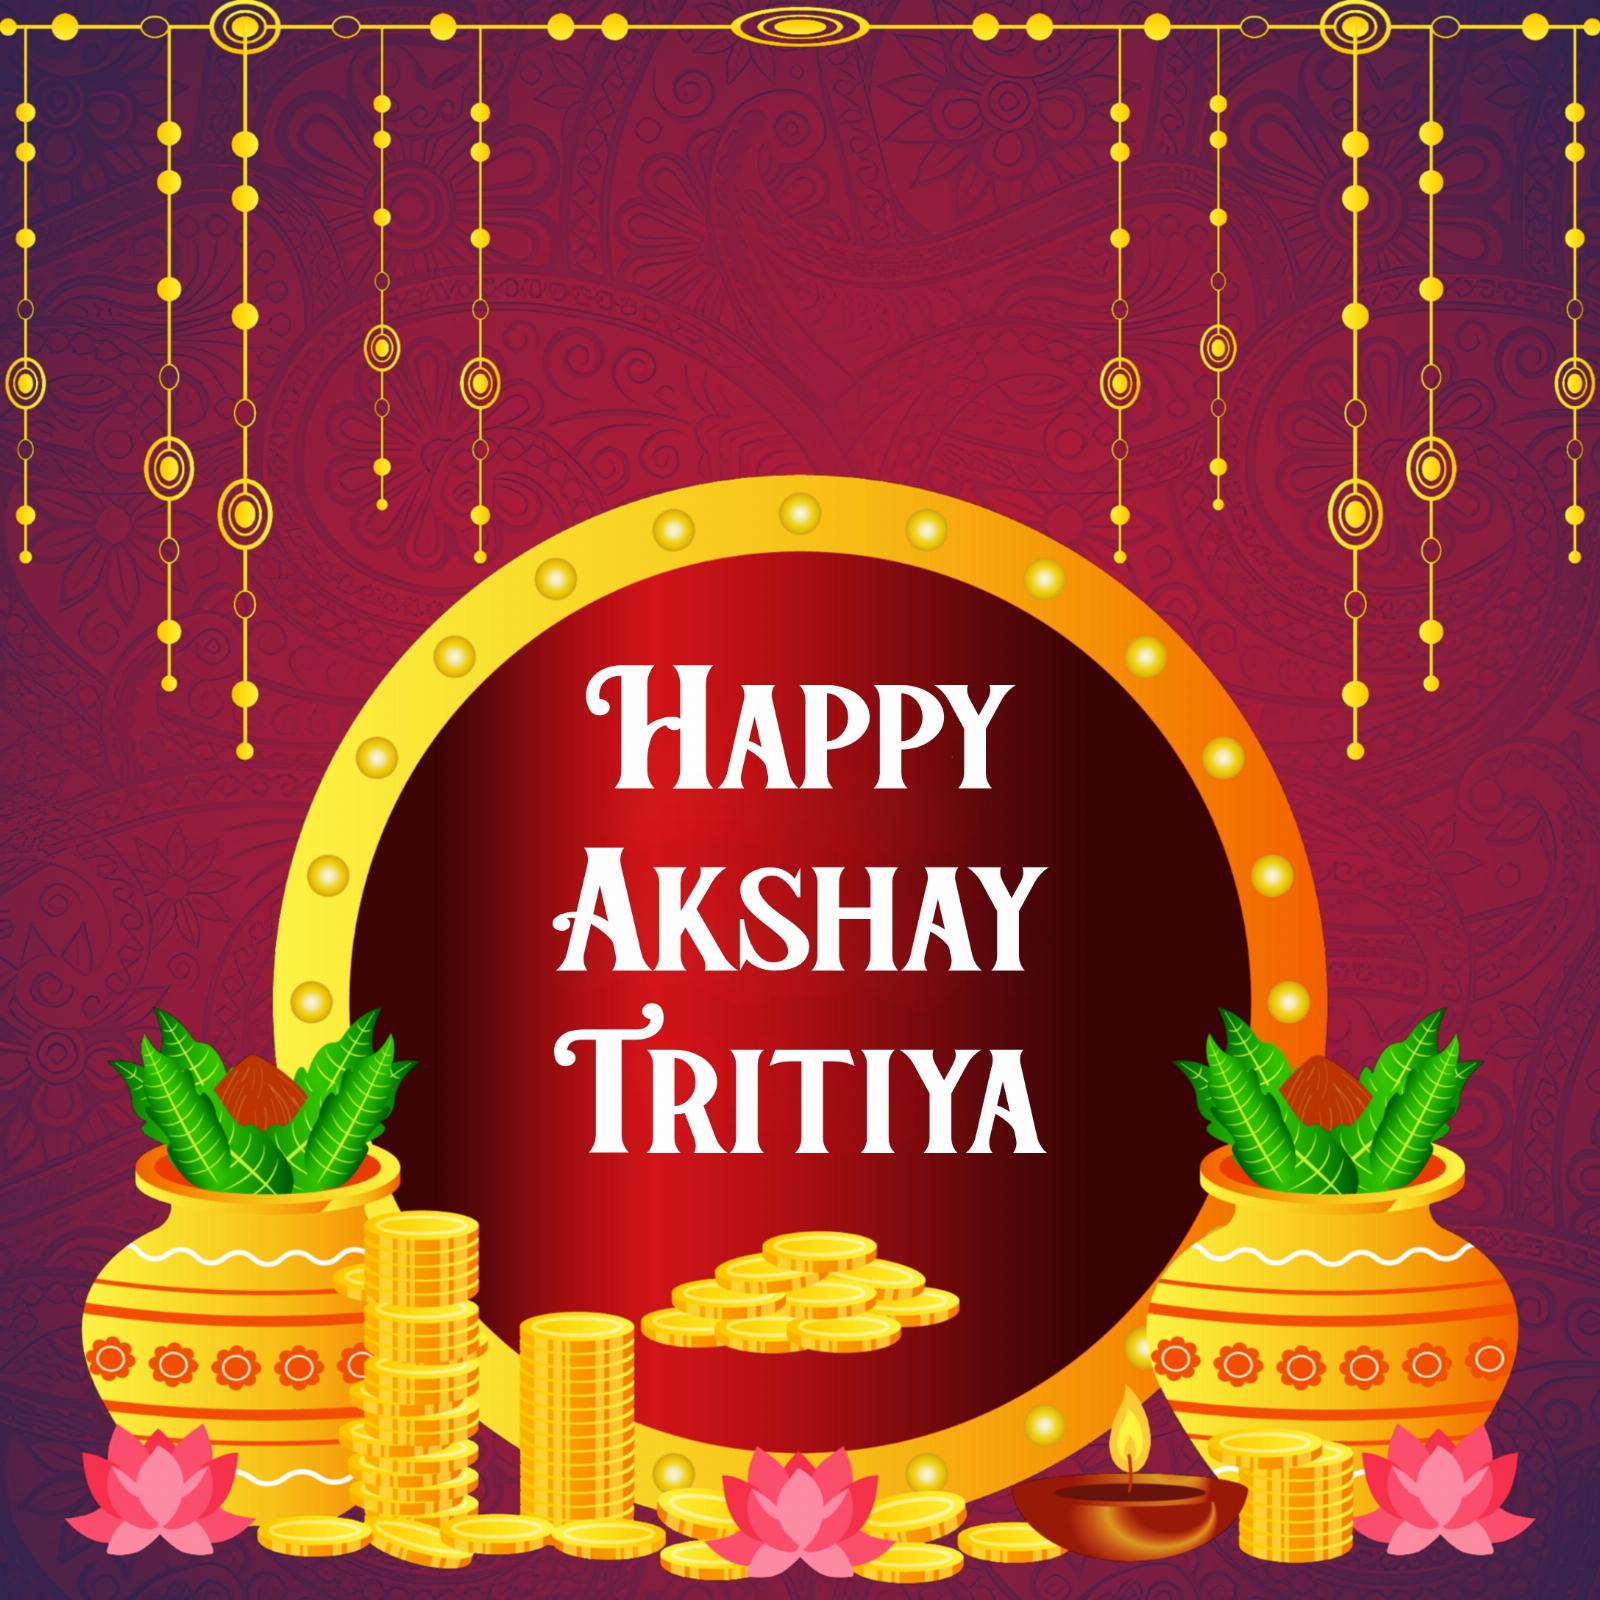 Happy Akshay Tritiya Images For Whatsapp Dp